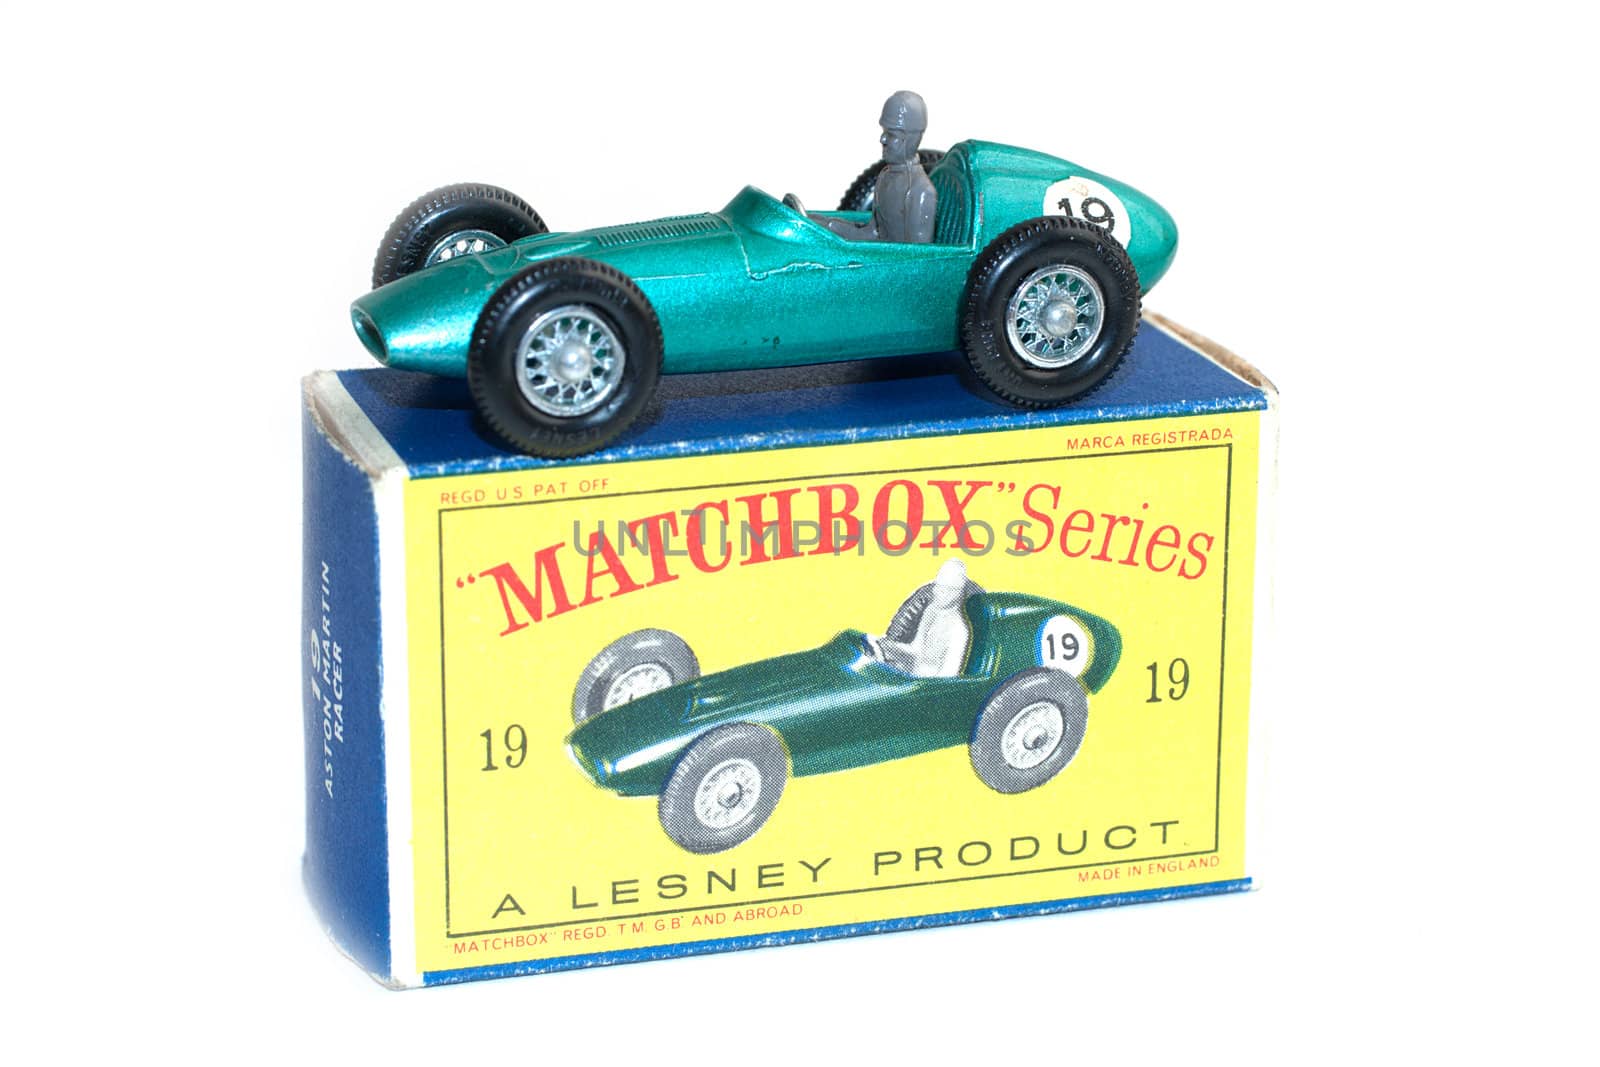 matchbox 1-75 die cast car, mint in box